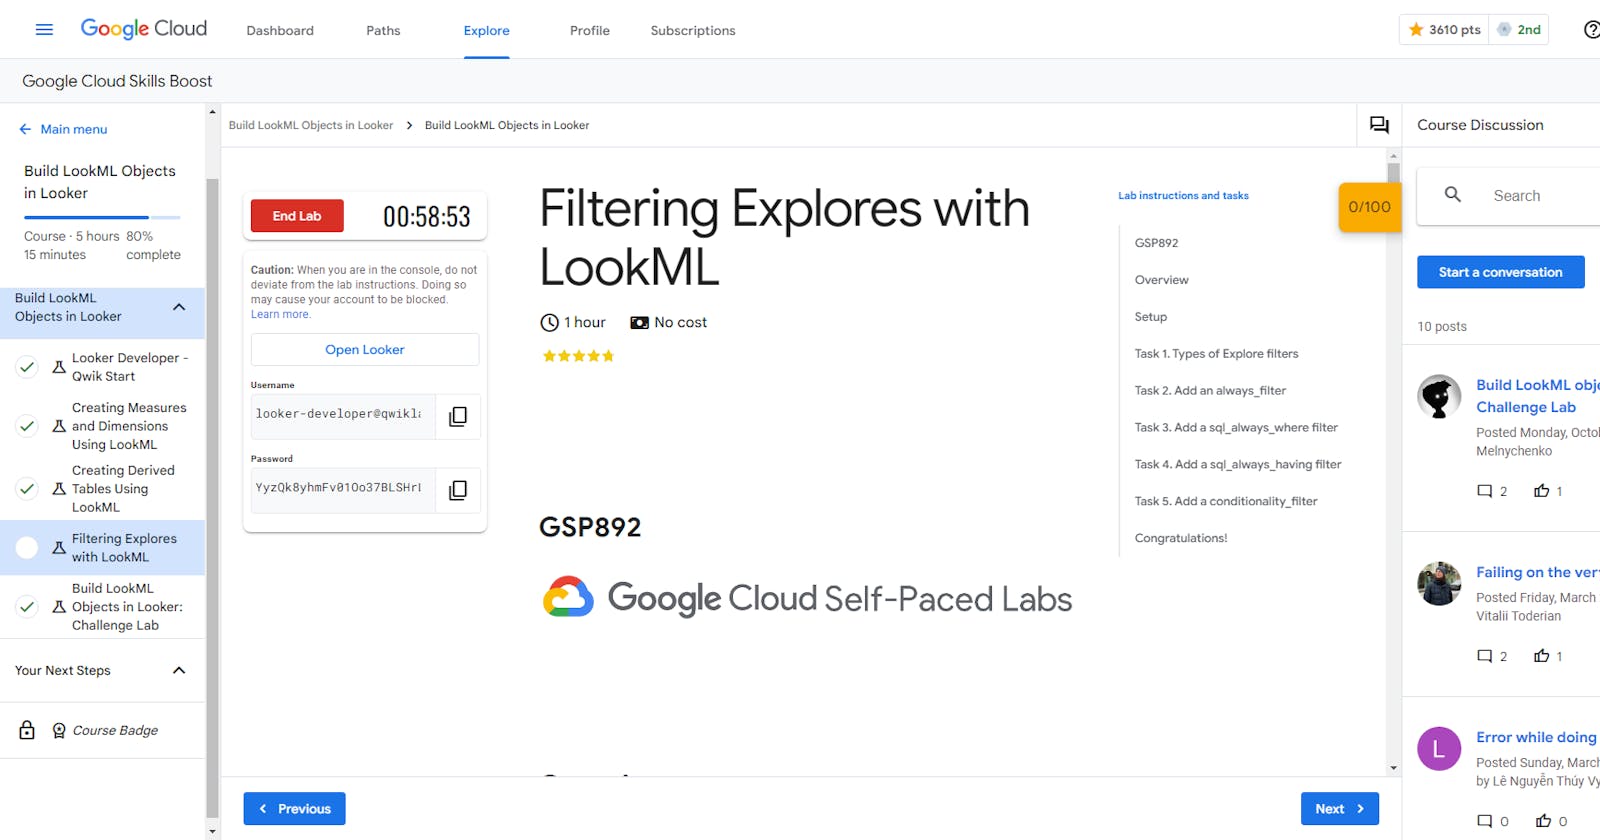 Filtering Explores with LookML - GSP892